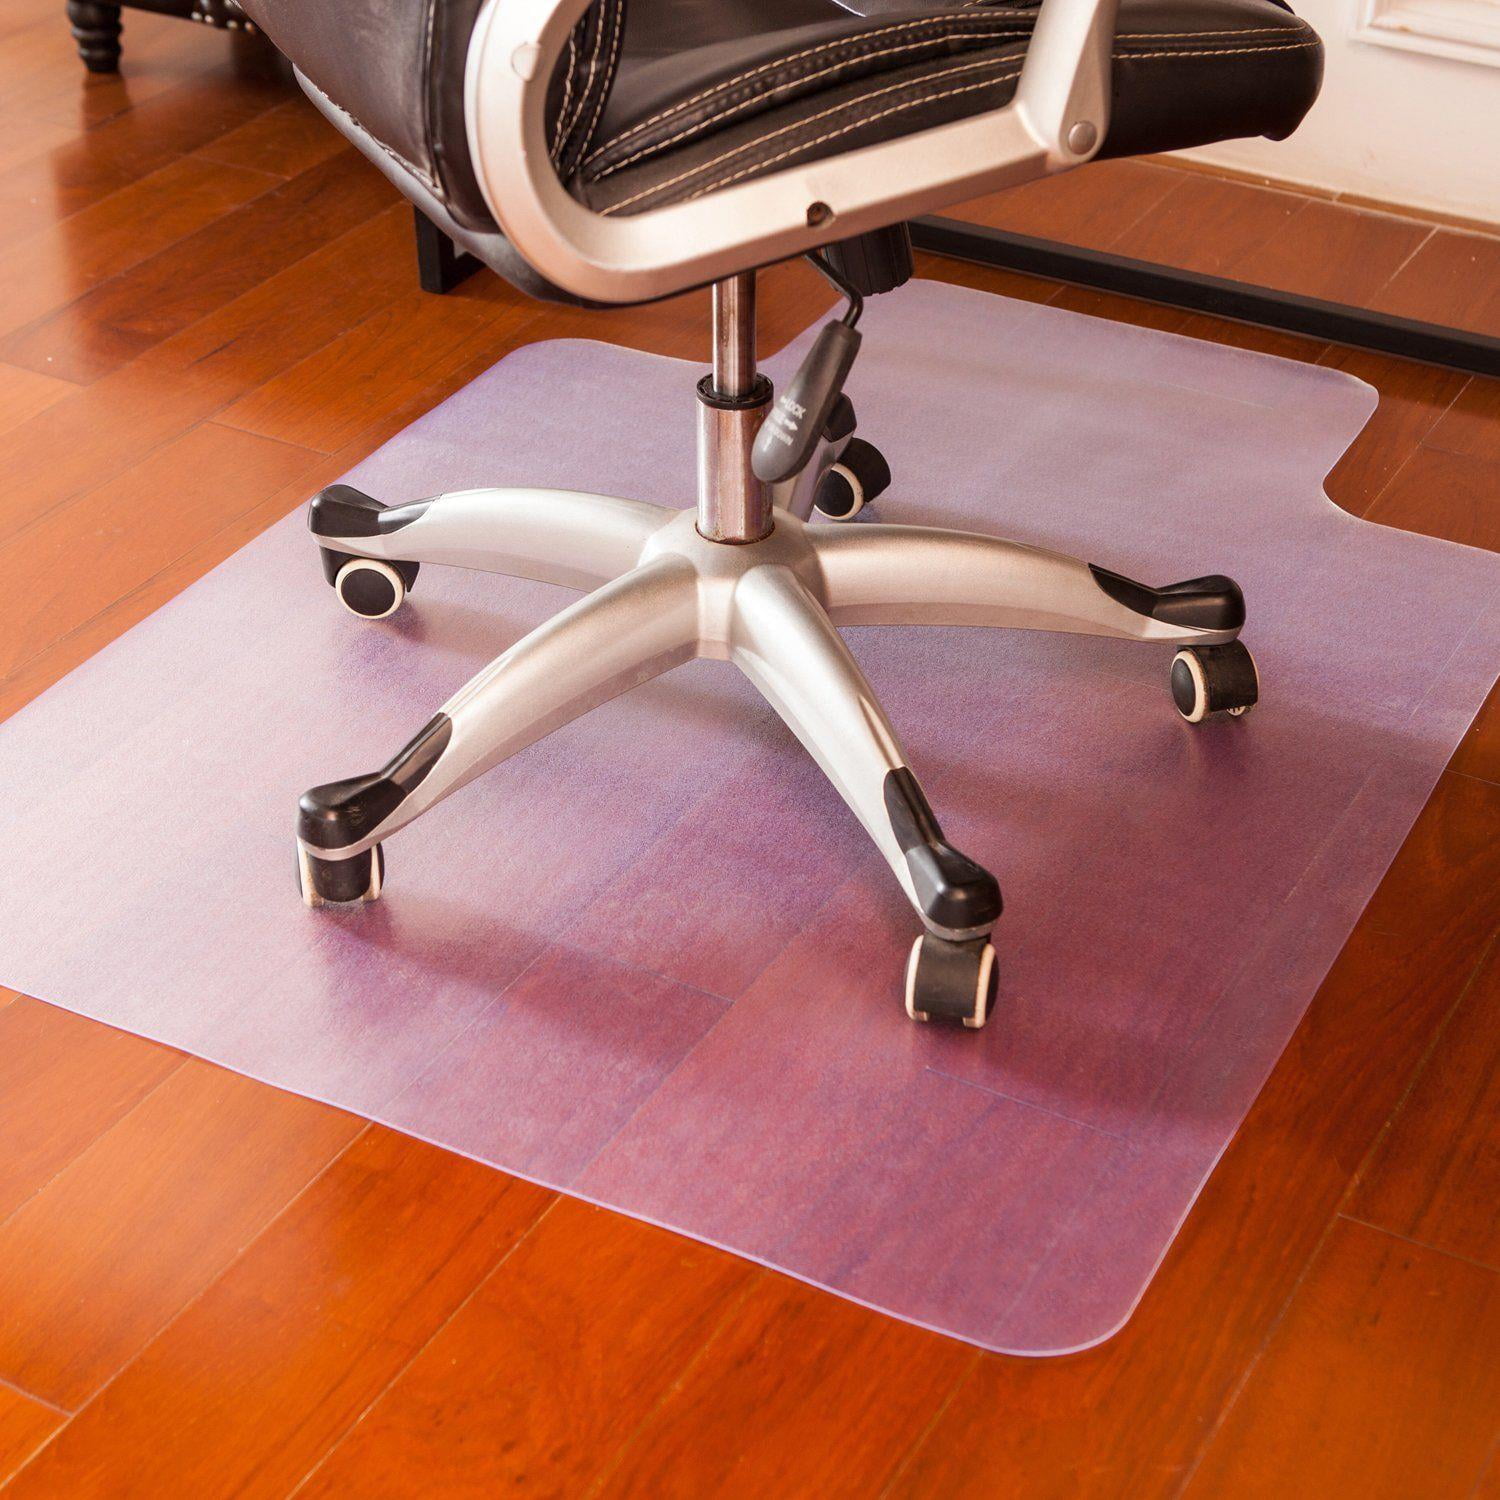 Ktaxon Office Chair Mat For Hardwood, Hardwood Floor Protectors